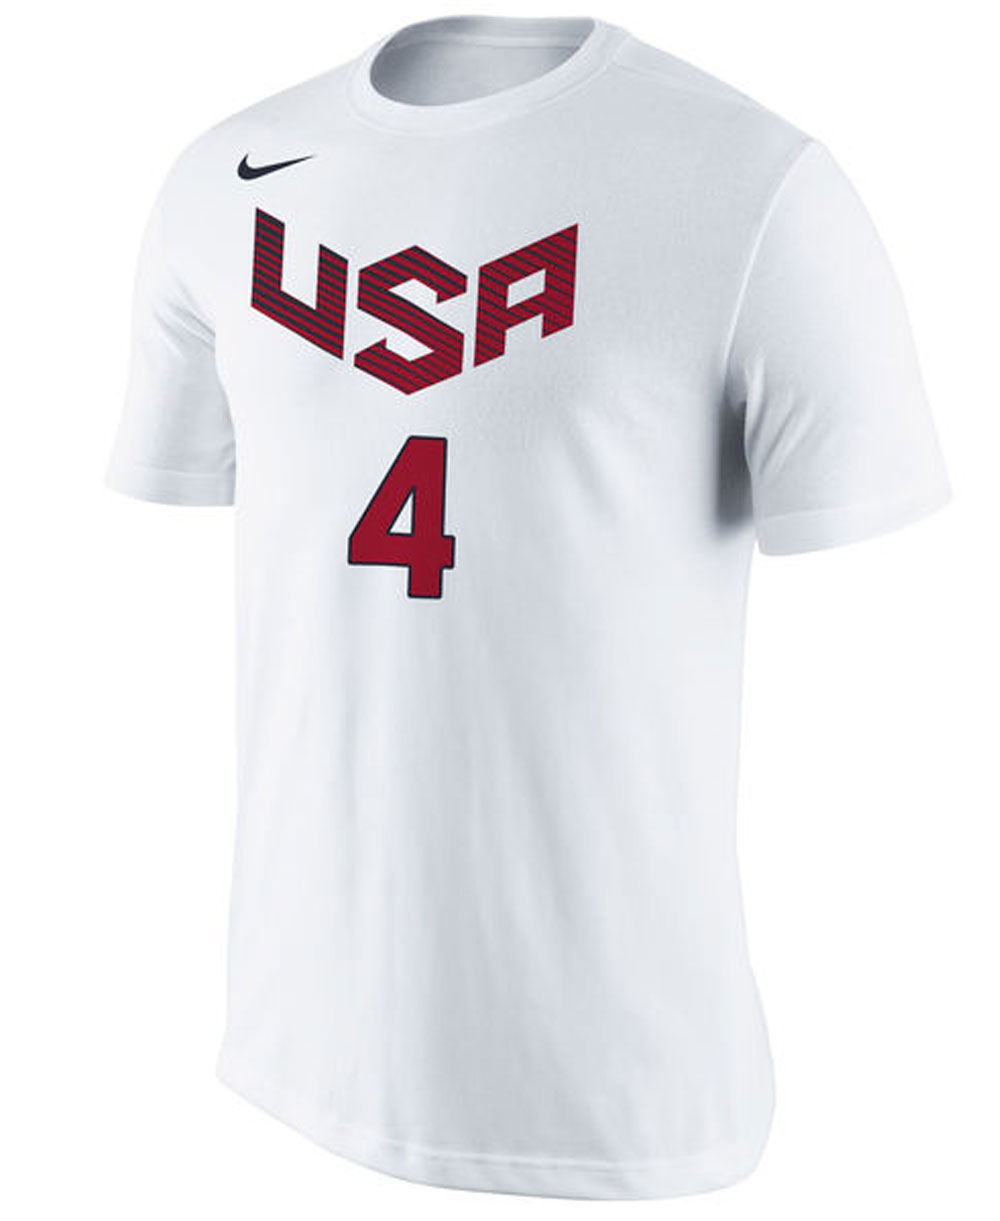 China enero Continental Nike USA Basketball Name and Number Camiseta para Hombre Stephen Curry